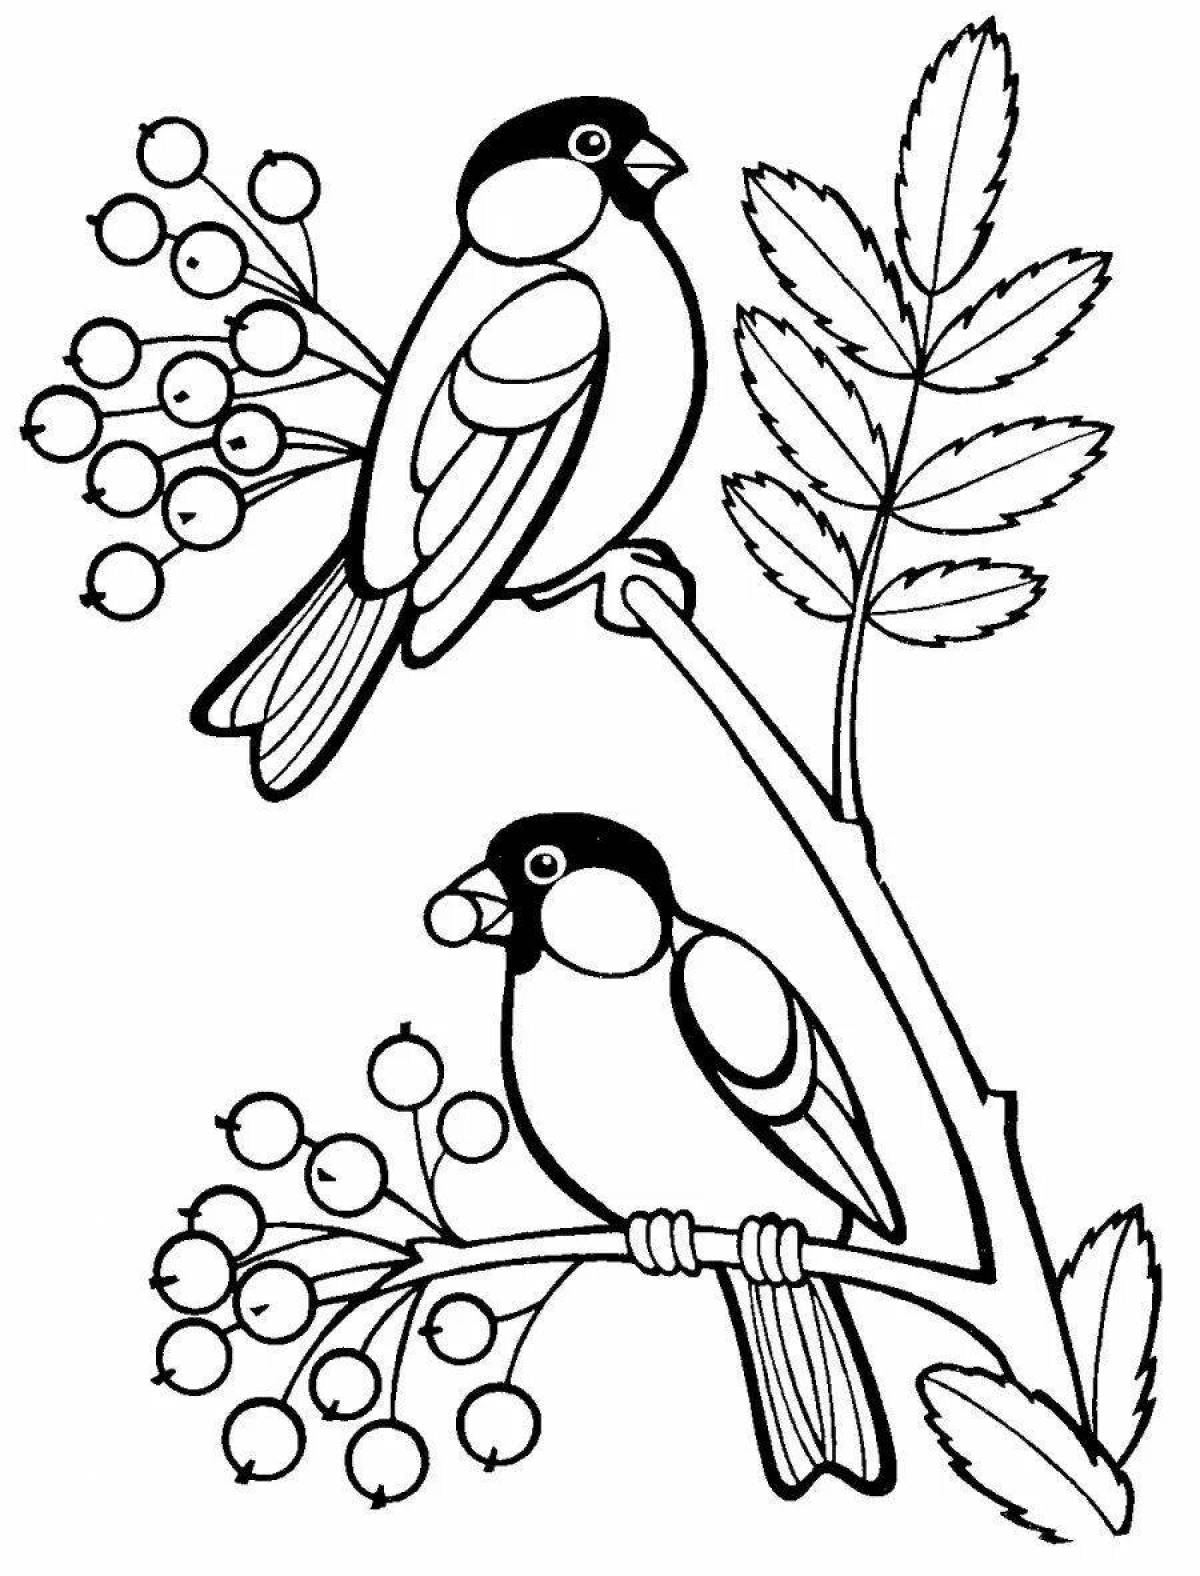 Beckoning bullfinch on a branch drawing